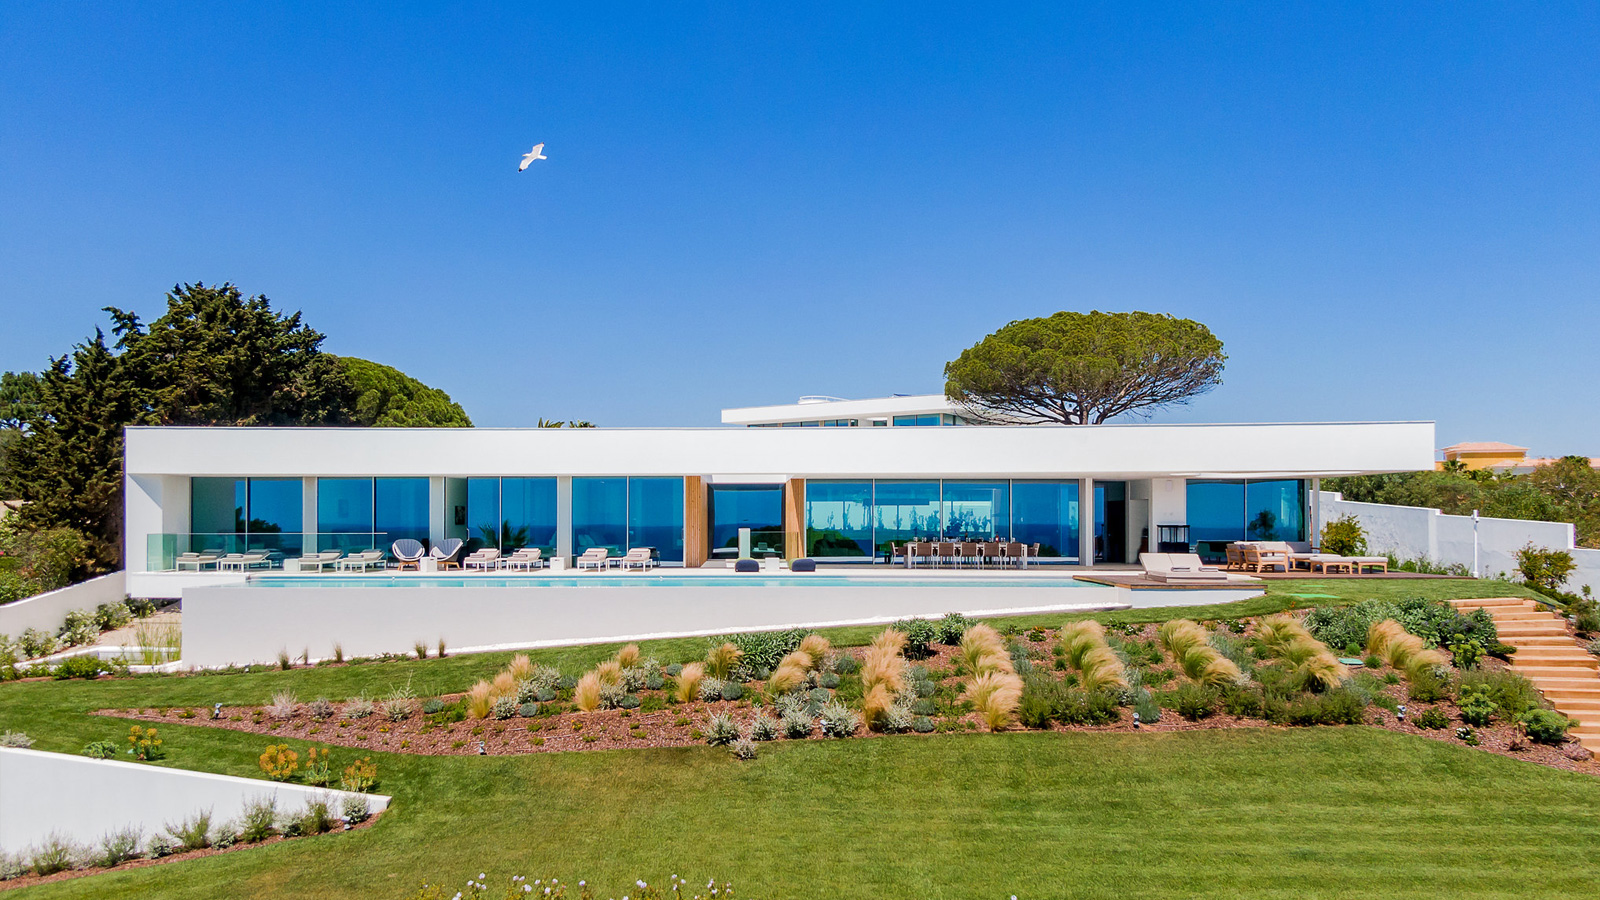 LUX MARE Casa M, casas férias luxo, piscina privada, perto da praia, Algarve, lagos,